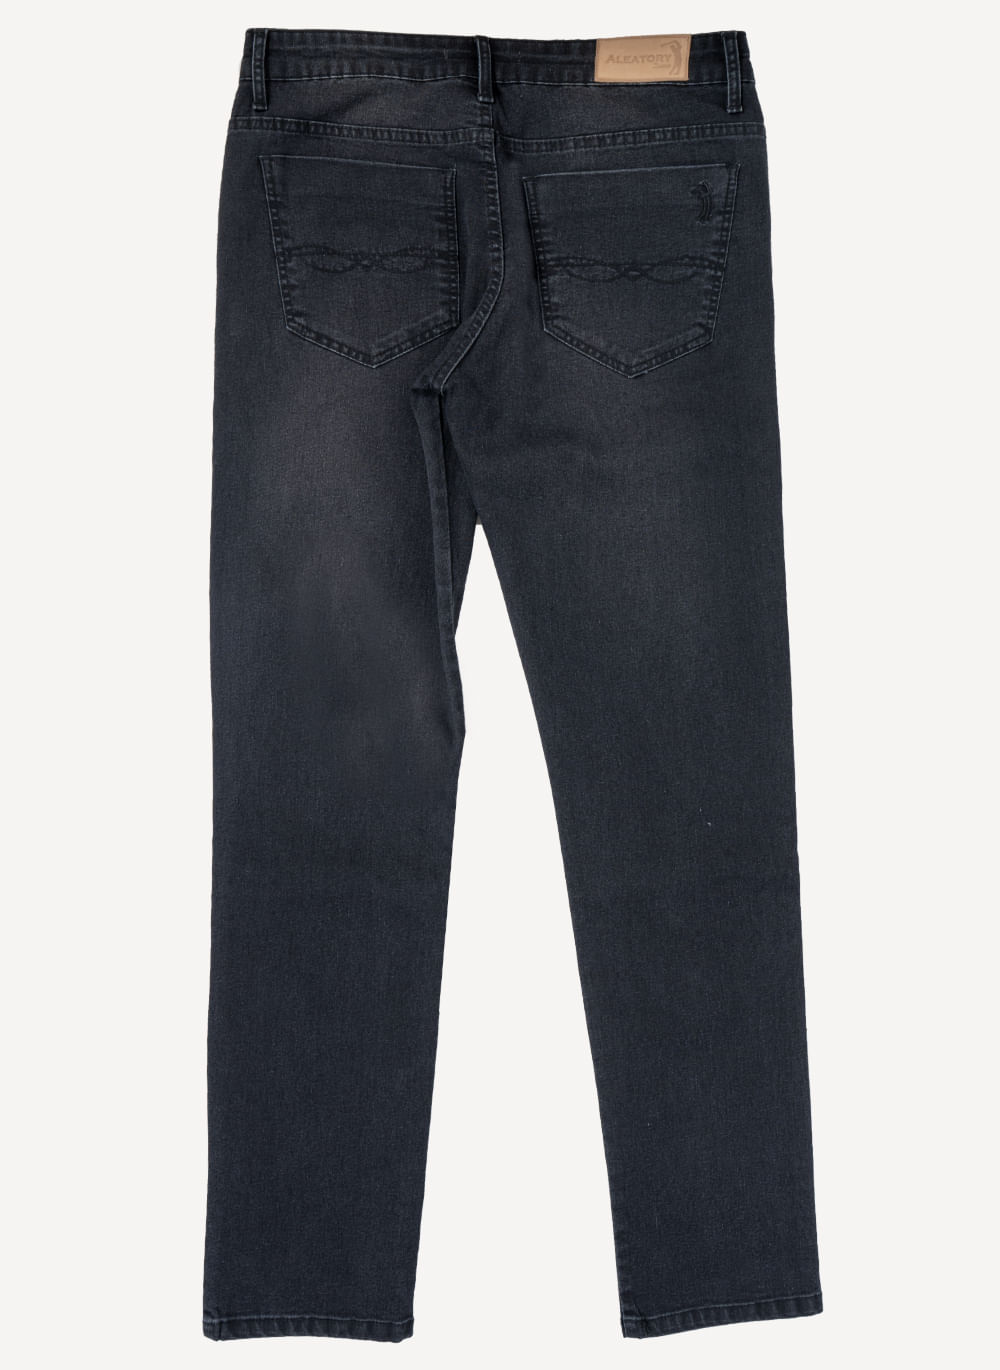 https---s3-sa-east-1.amazonaws.com-softvar-Zetop-58972-img_original-calca-masculina-jeans-modelo-dark-2-